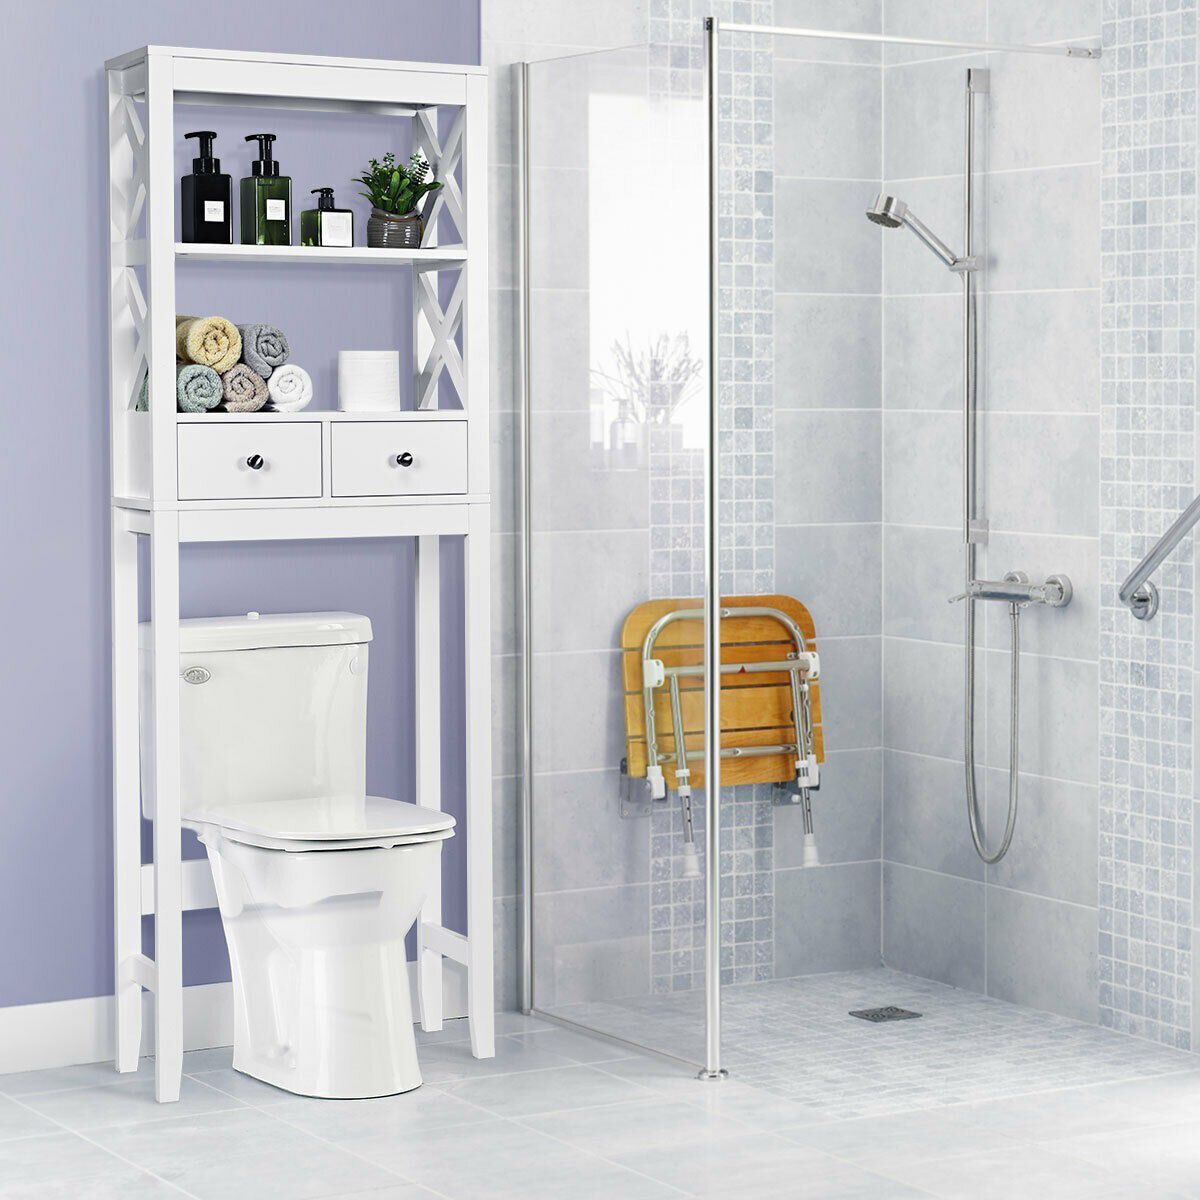 NEW Bathroom Storage Shelf to Organize Bath supplies & accessories for toilet bedroom kitchen